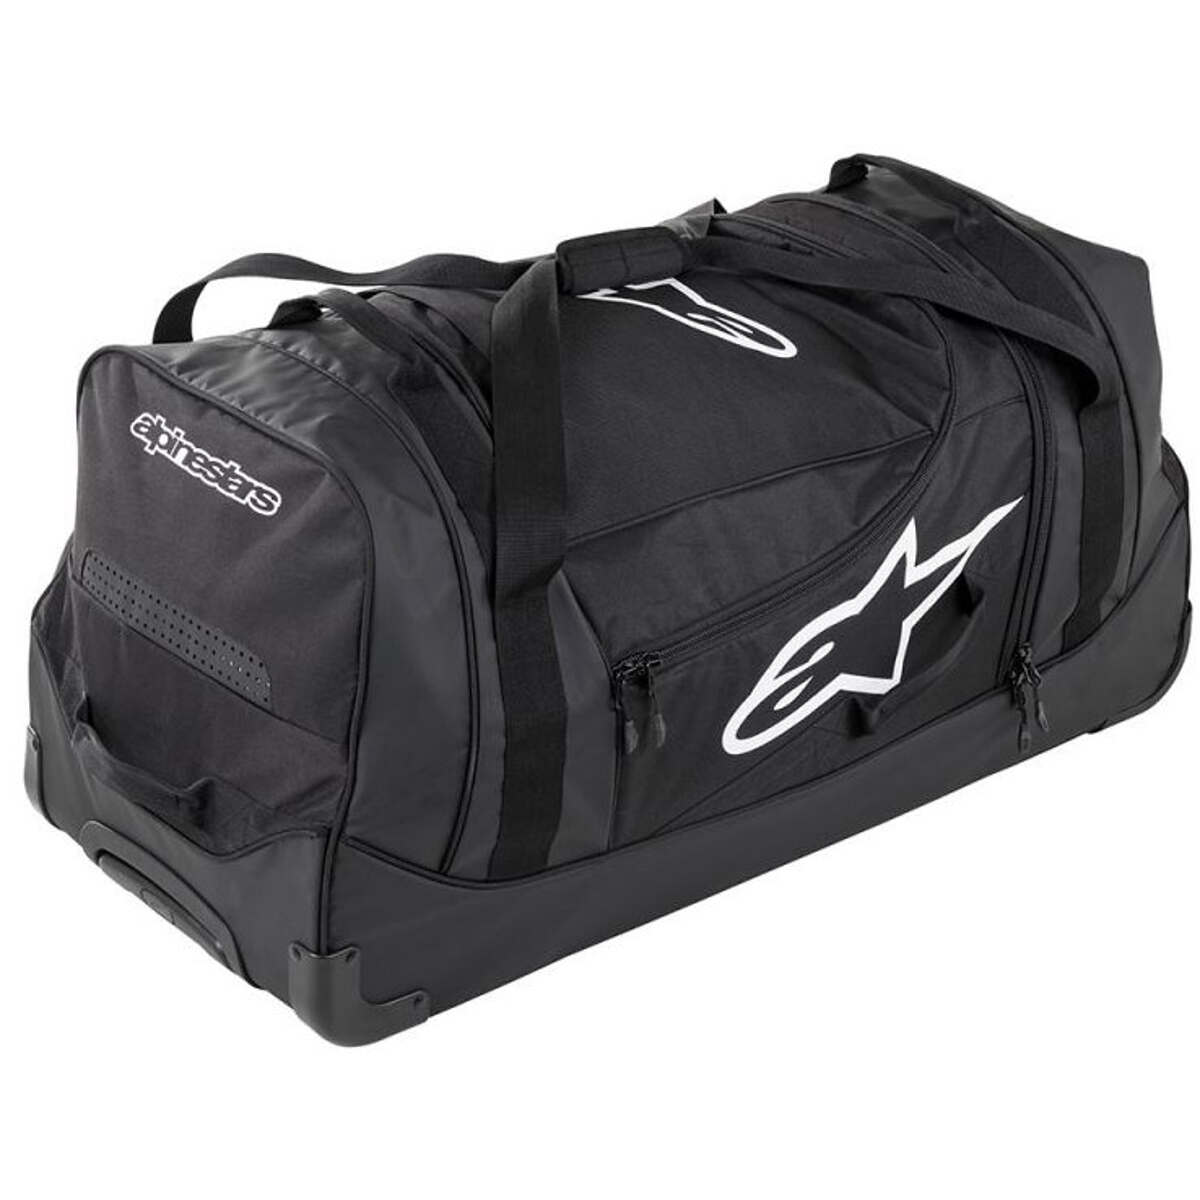 Alpinestars MX Duffle Bag Komodo Black/Anthracite/White